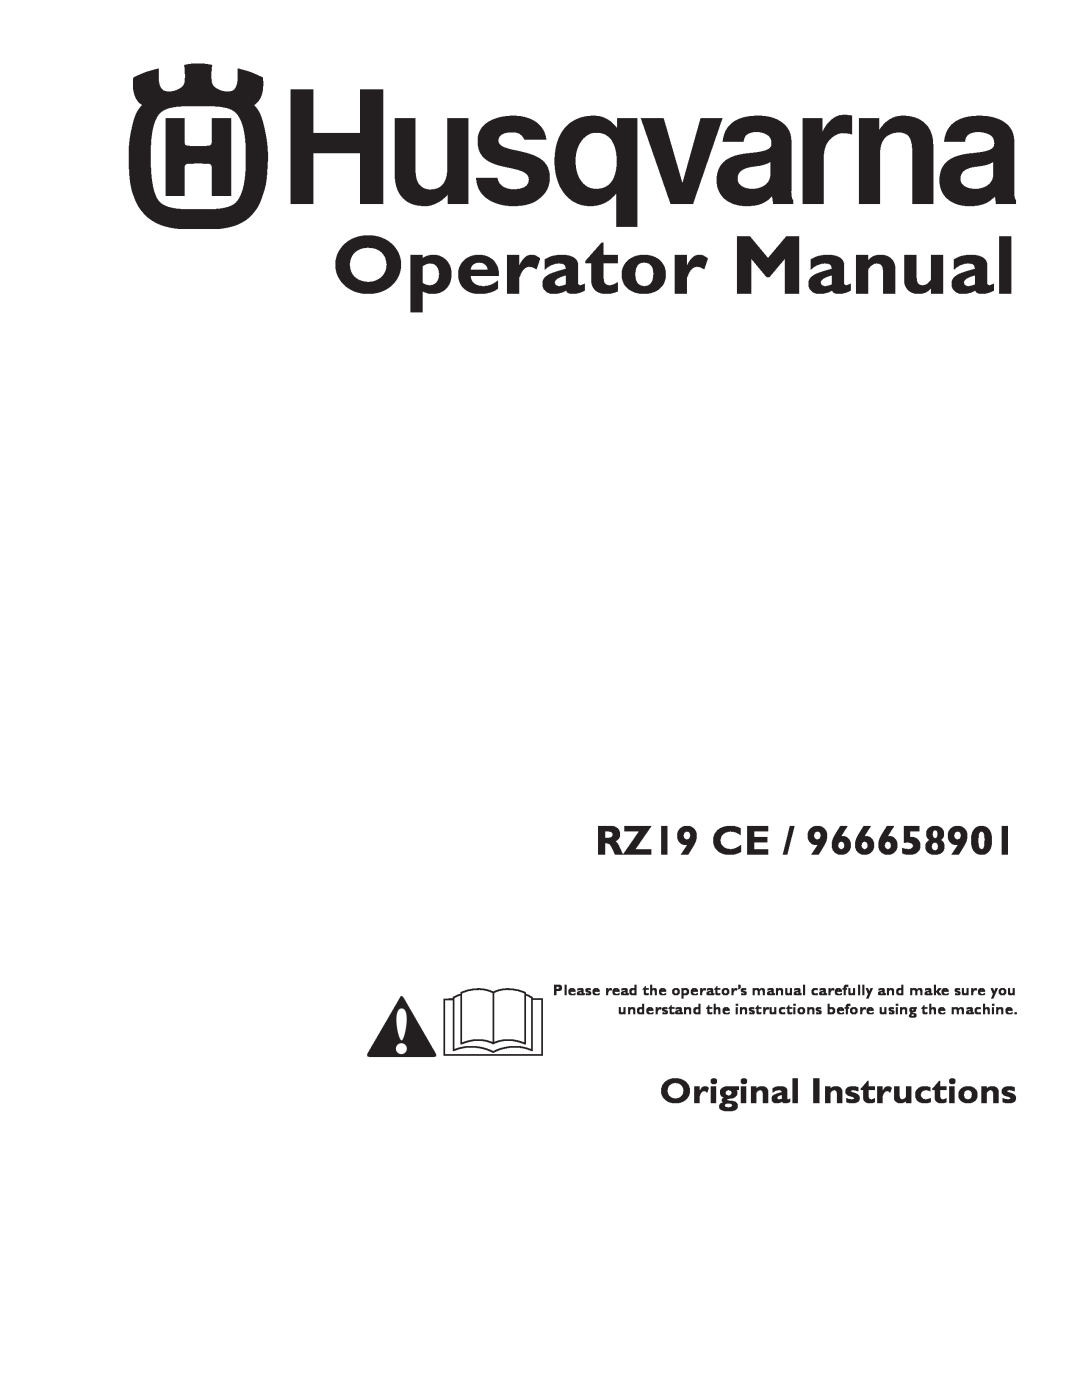 Husqvarna RZ19 CE / 966658901 manual Operator Manual, Original Instructions 